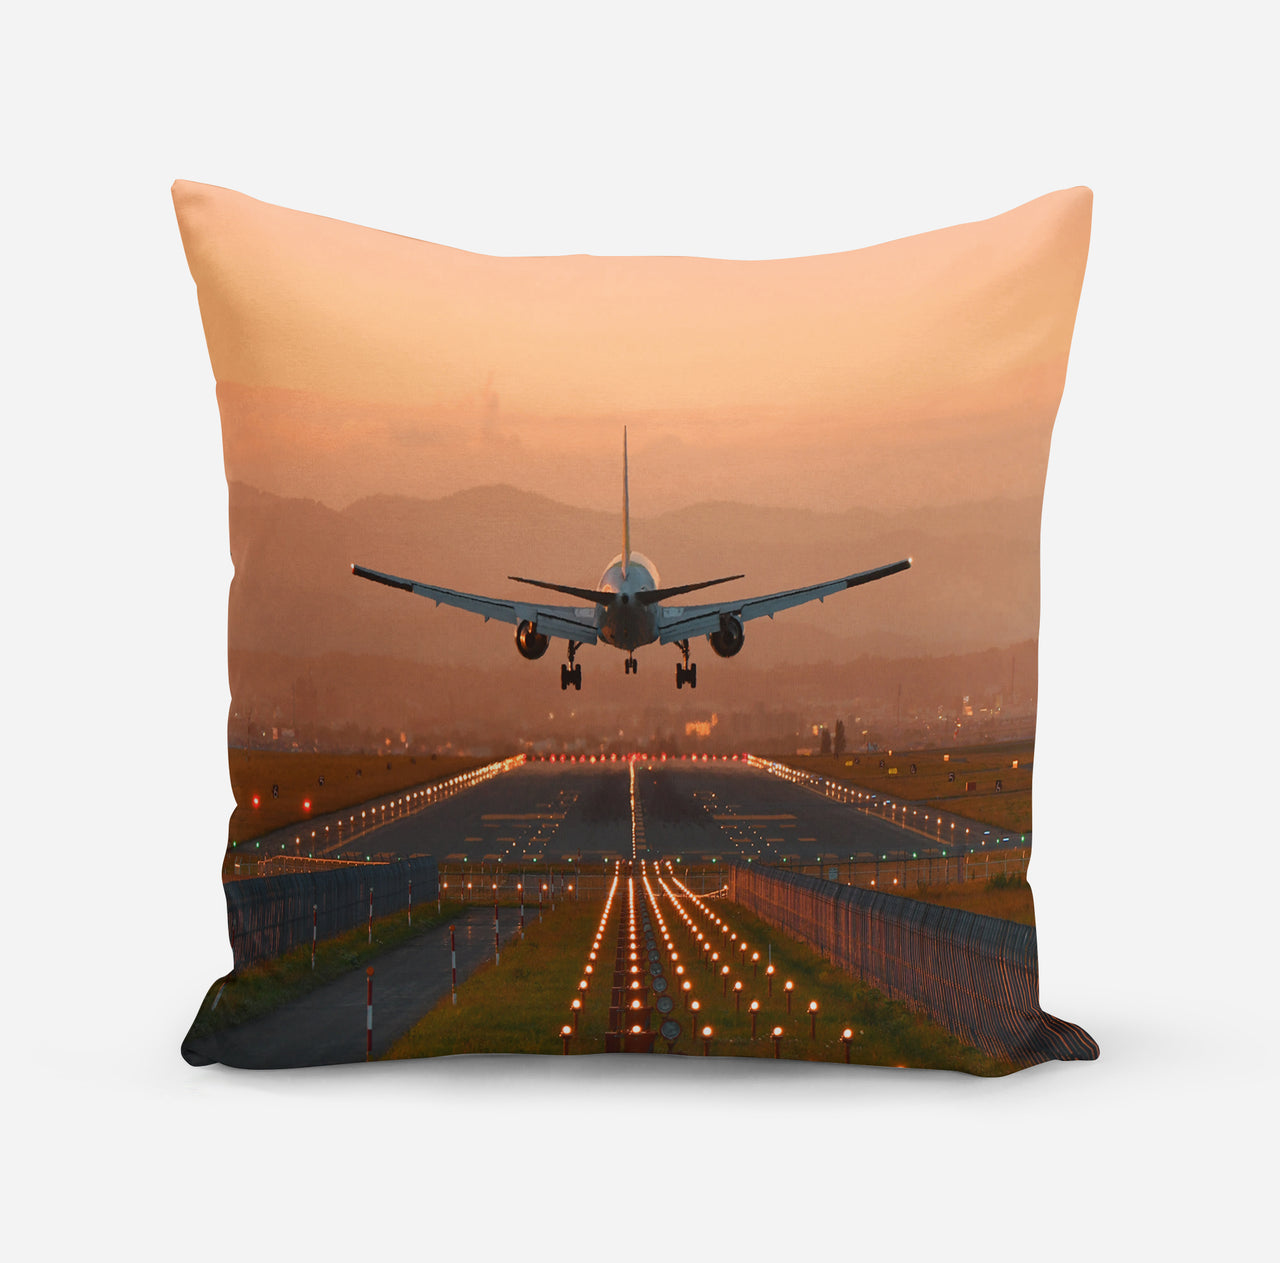 Super Cool Landing During Sunset Designed Pillows